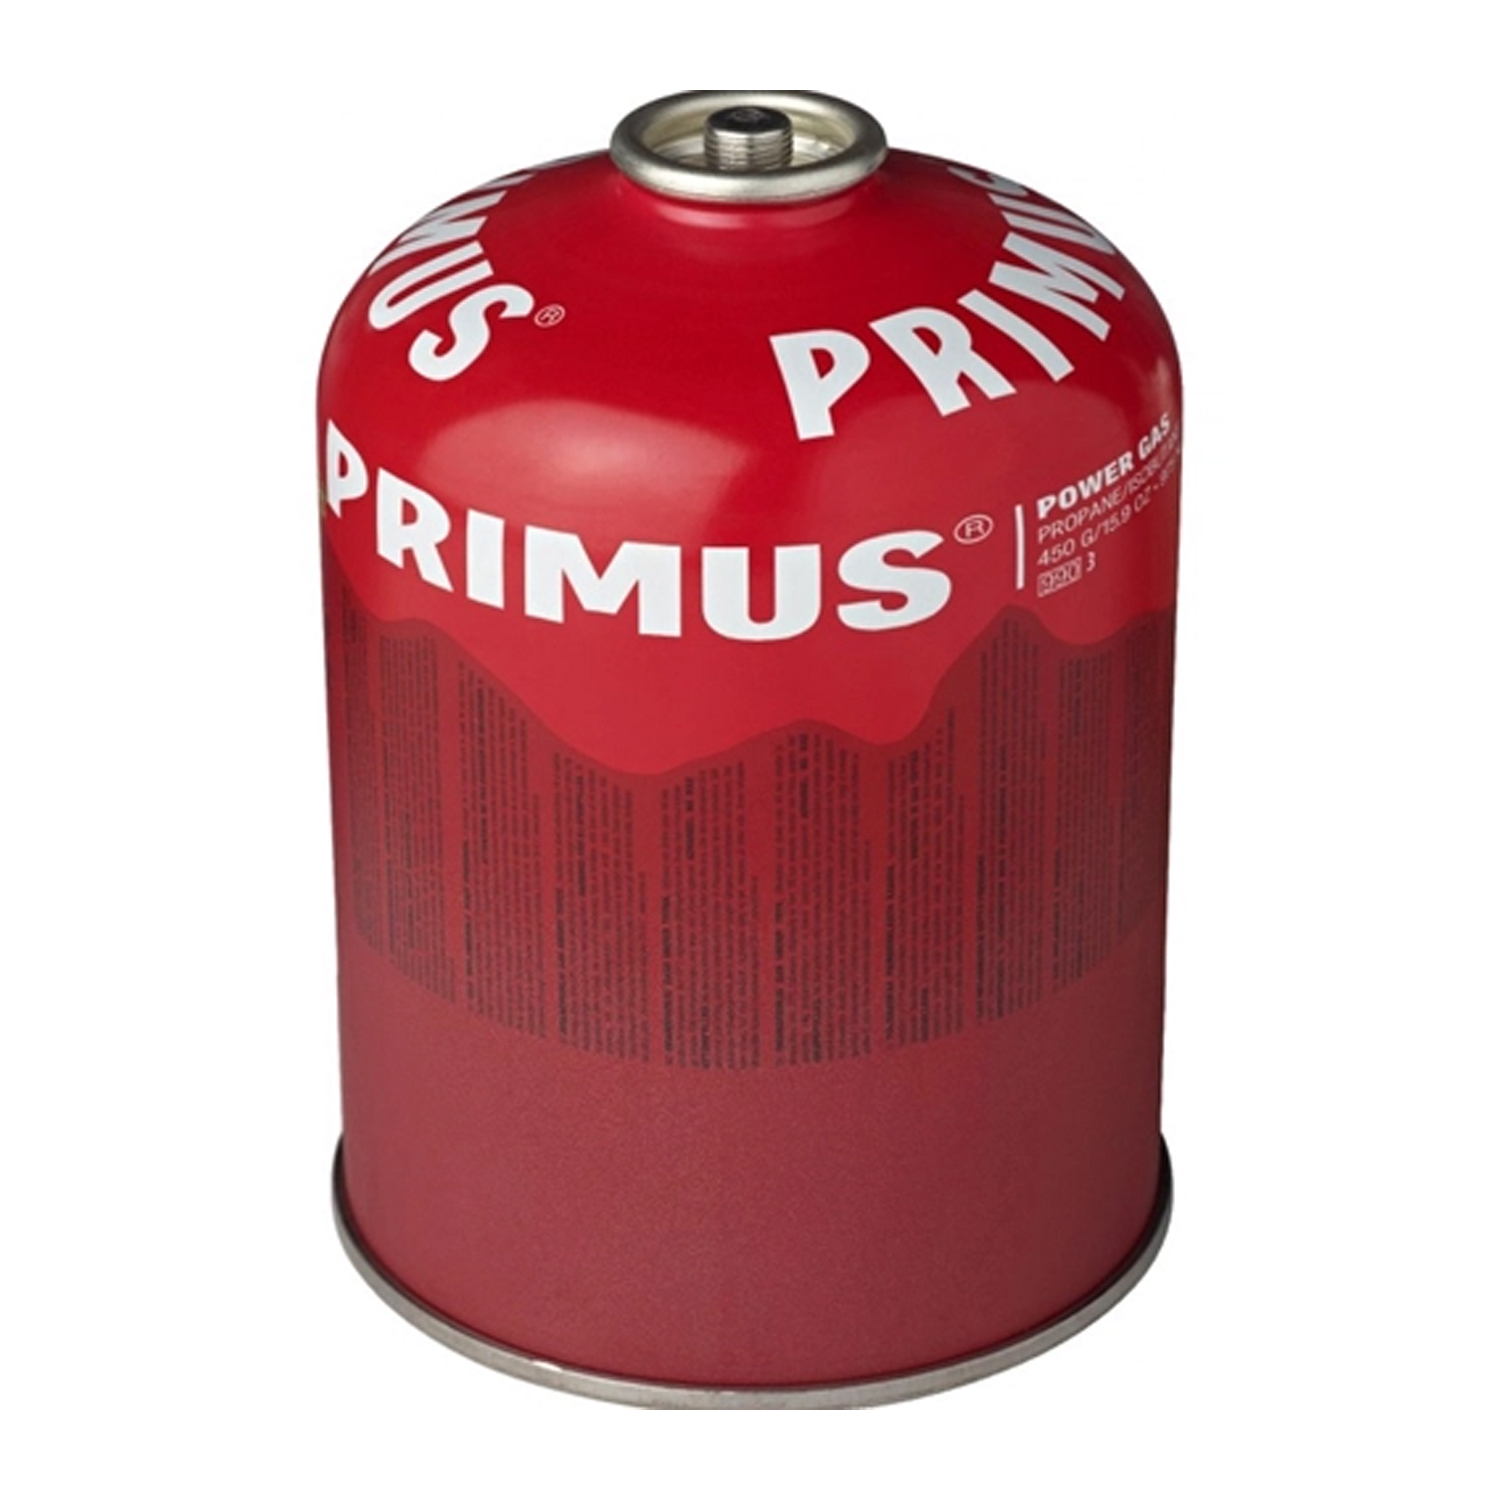 PRIMUS Power Gas 450g L2